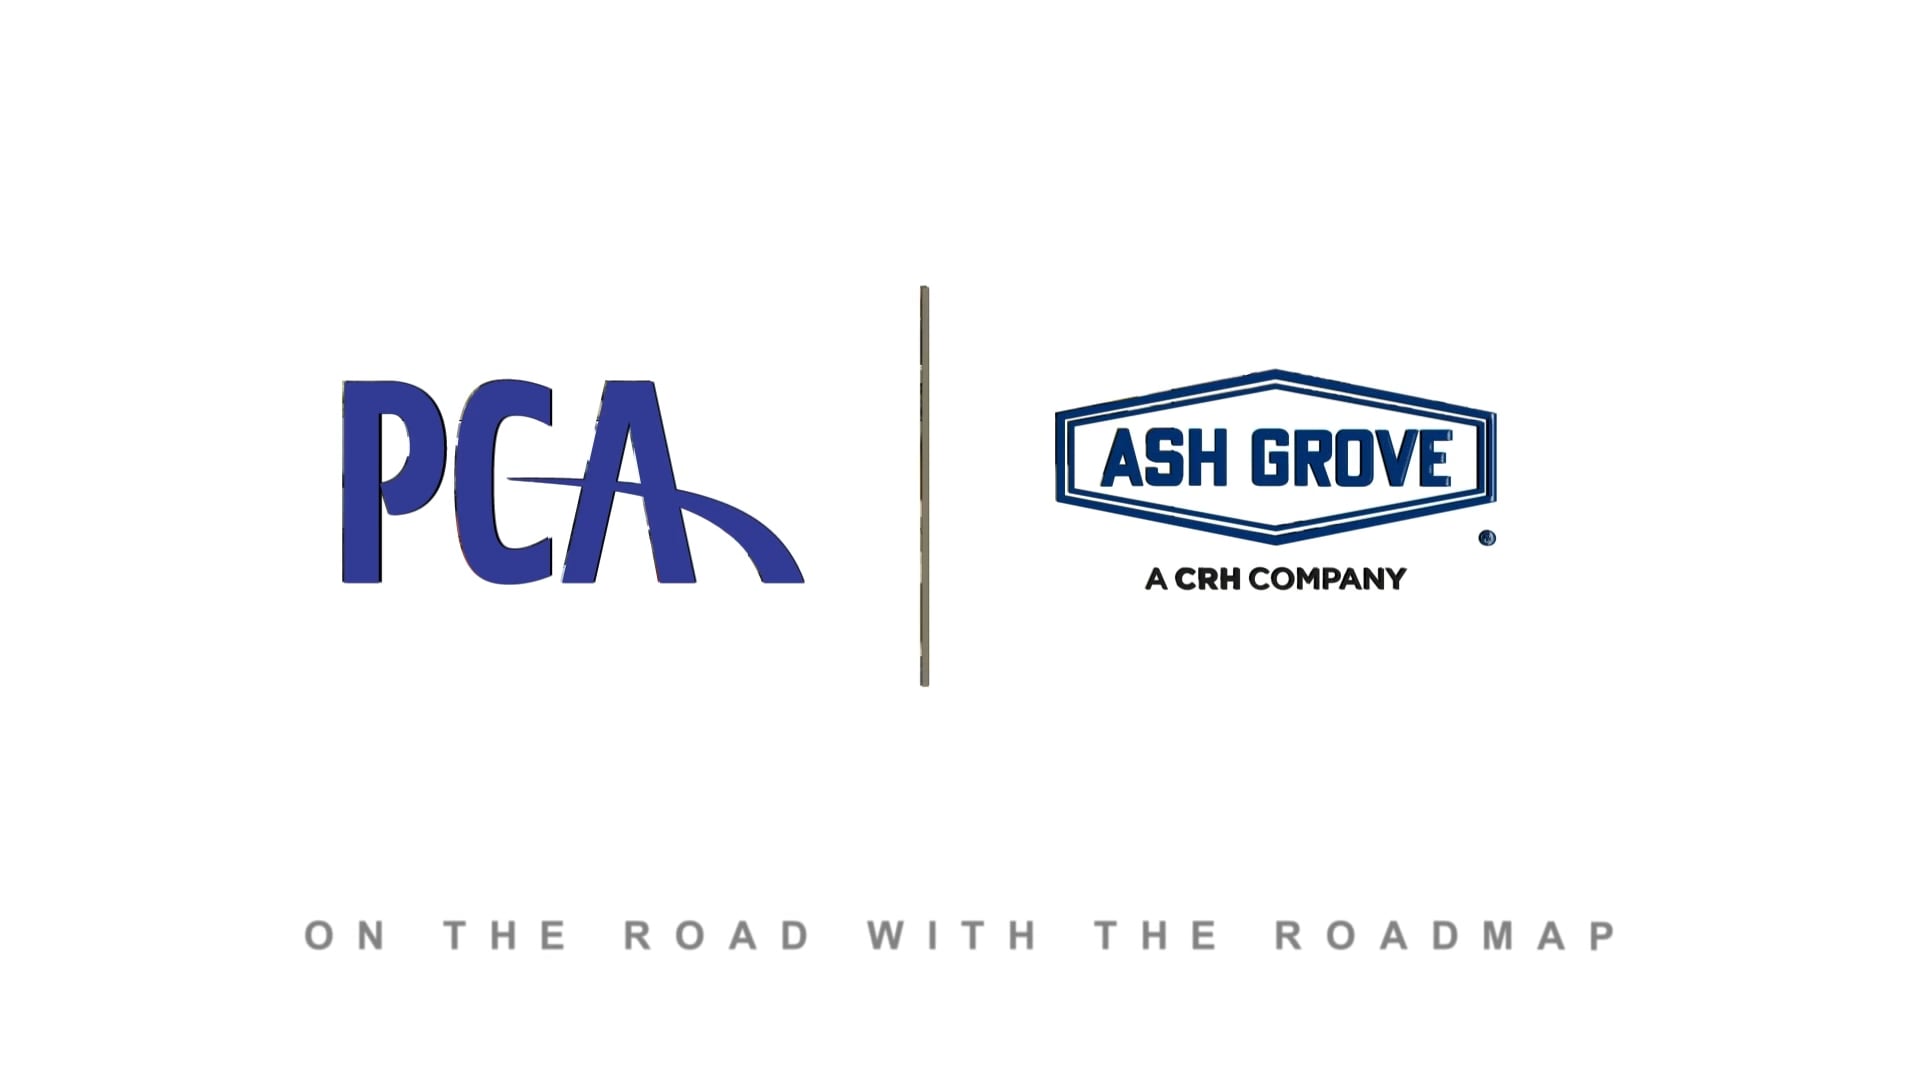 Ash Grove, a CRH Company: Inspiring the Next Generation